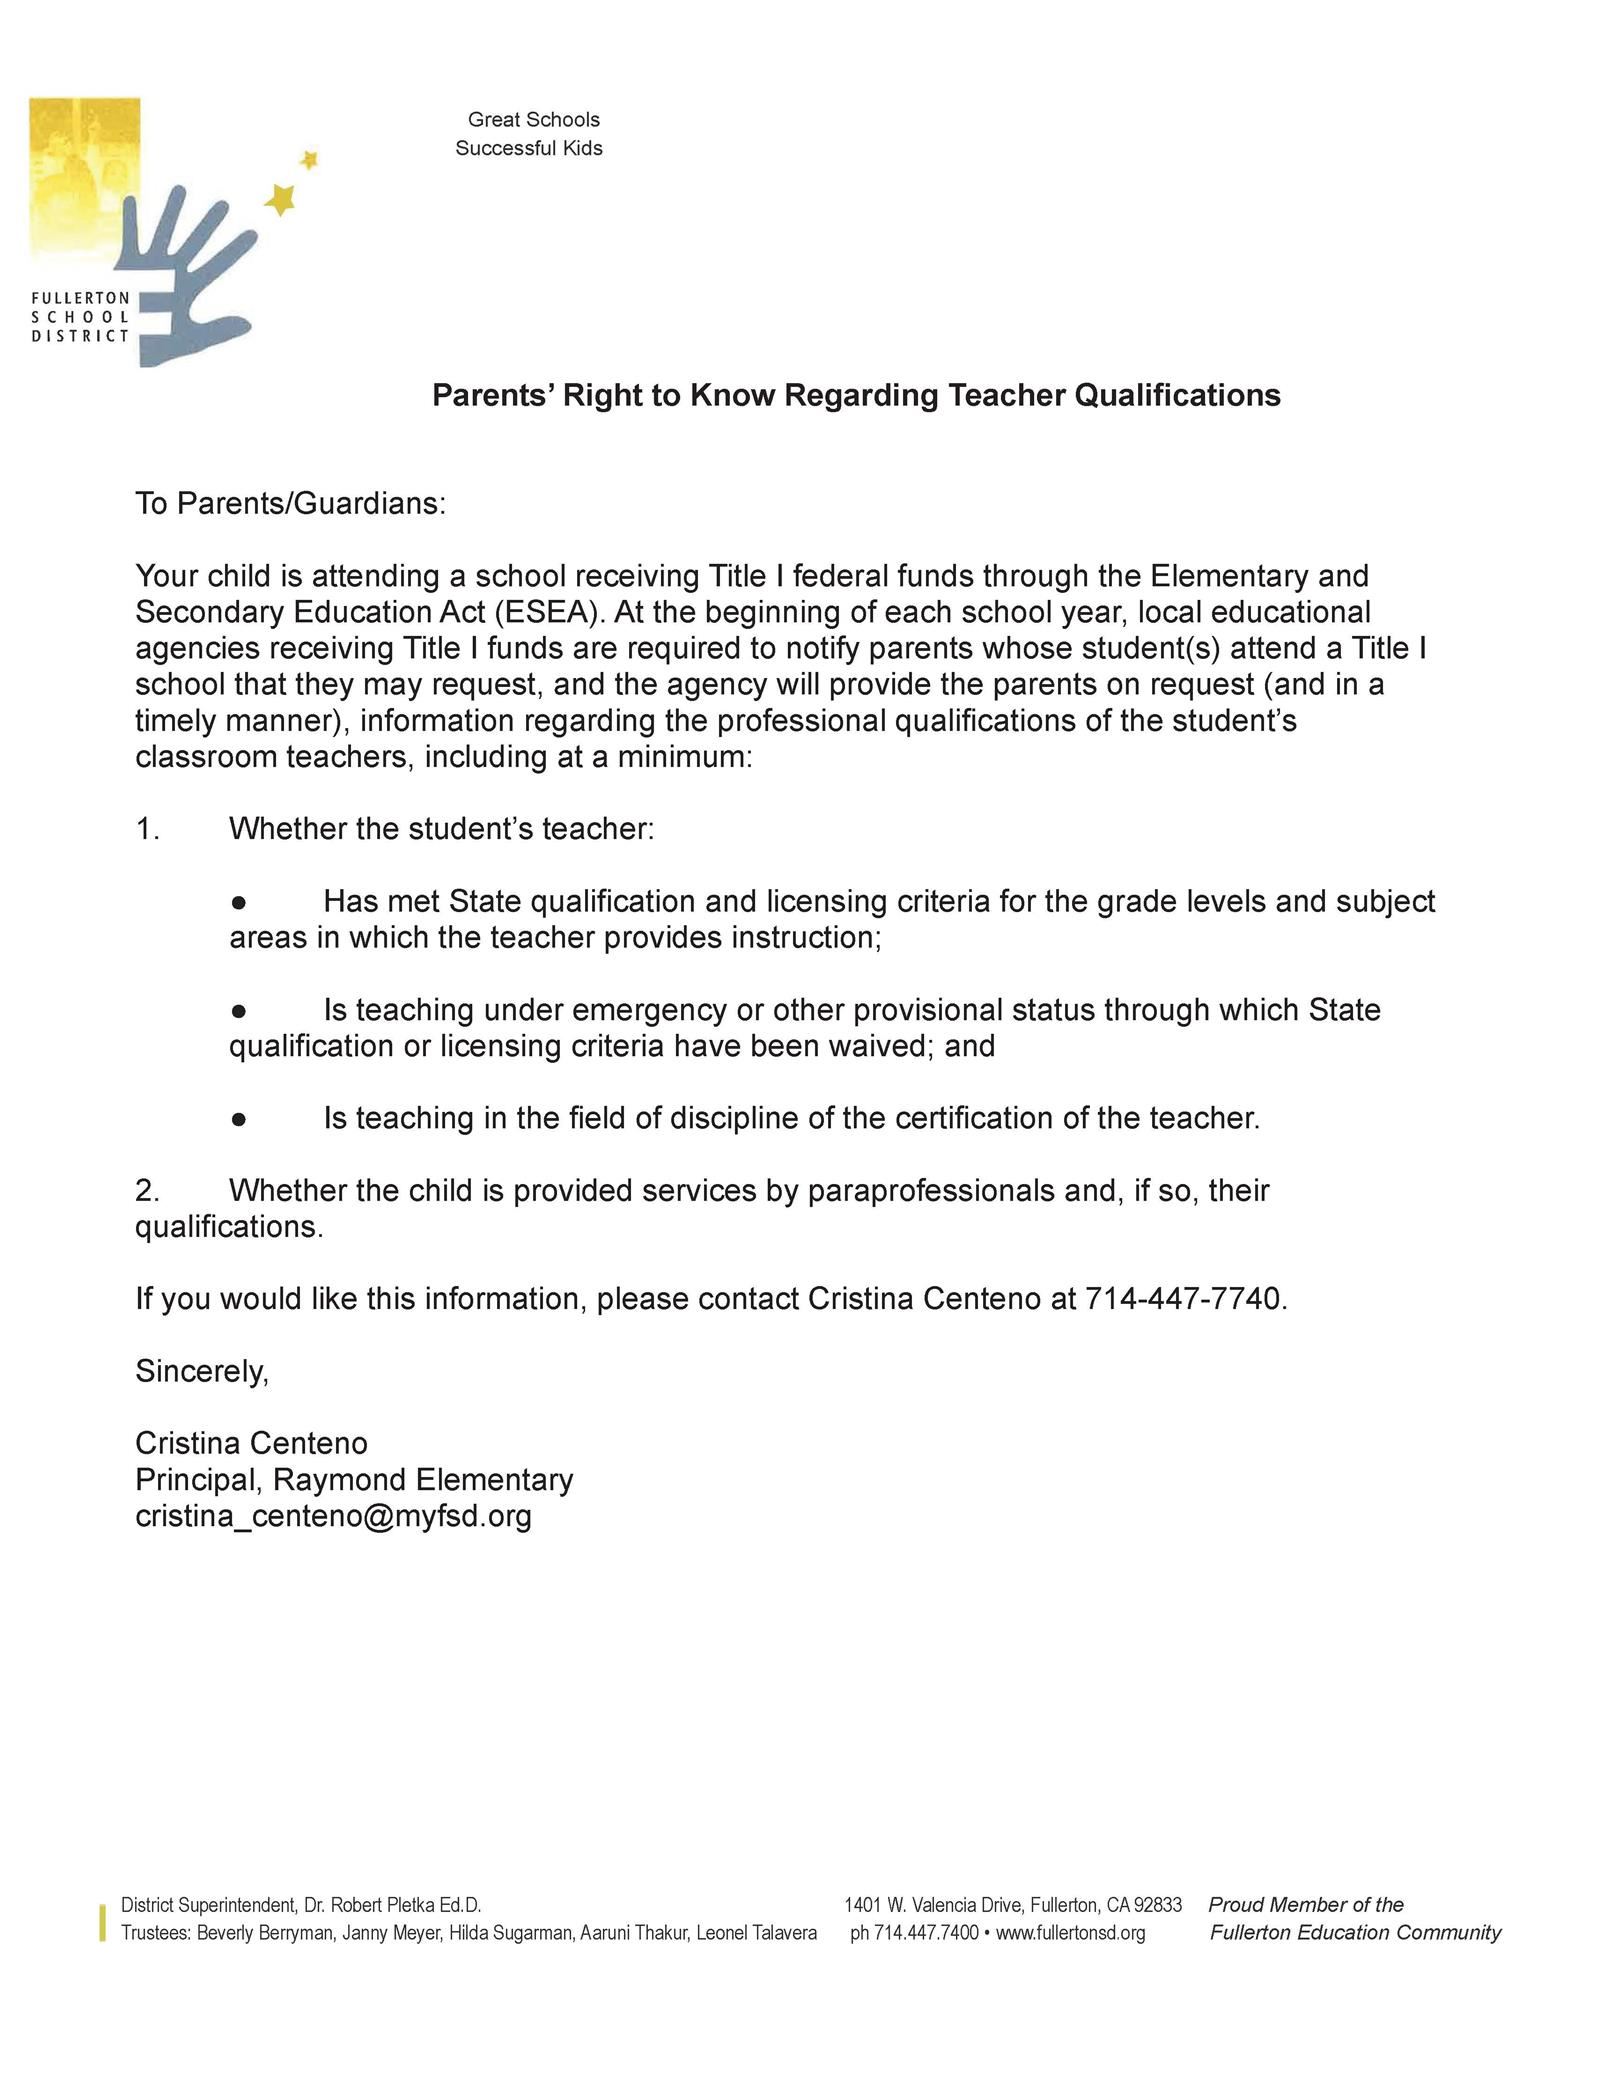  Raymond Title 1 Teacher Qualifications Letter